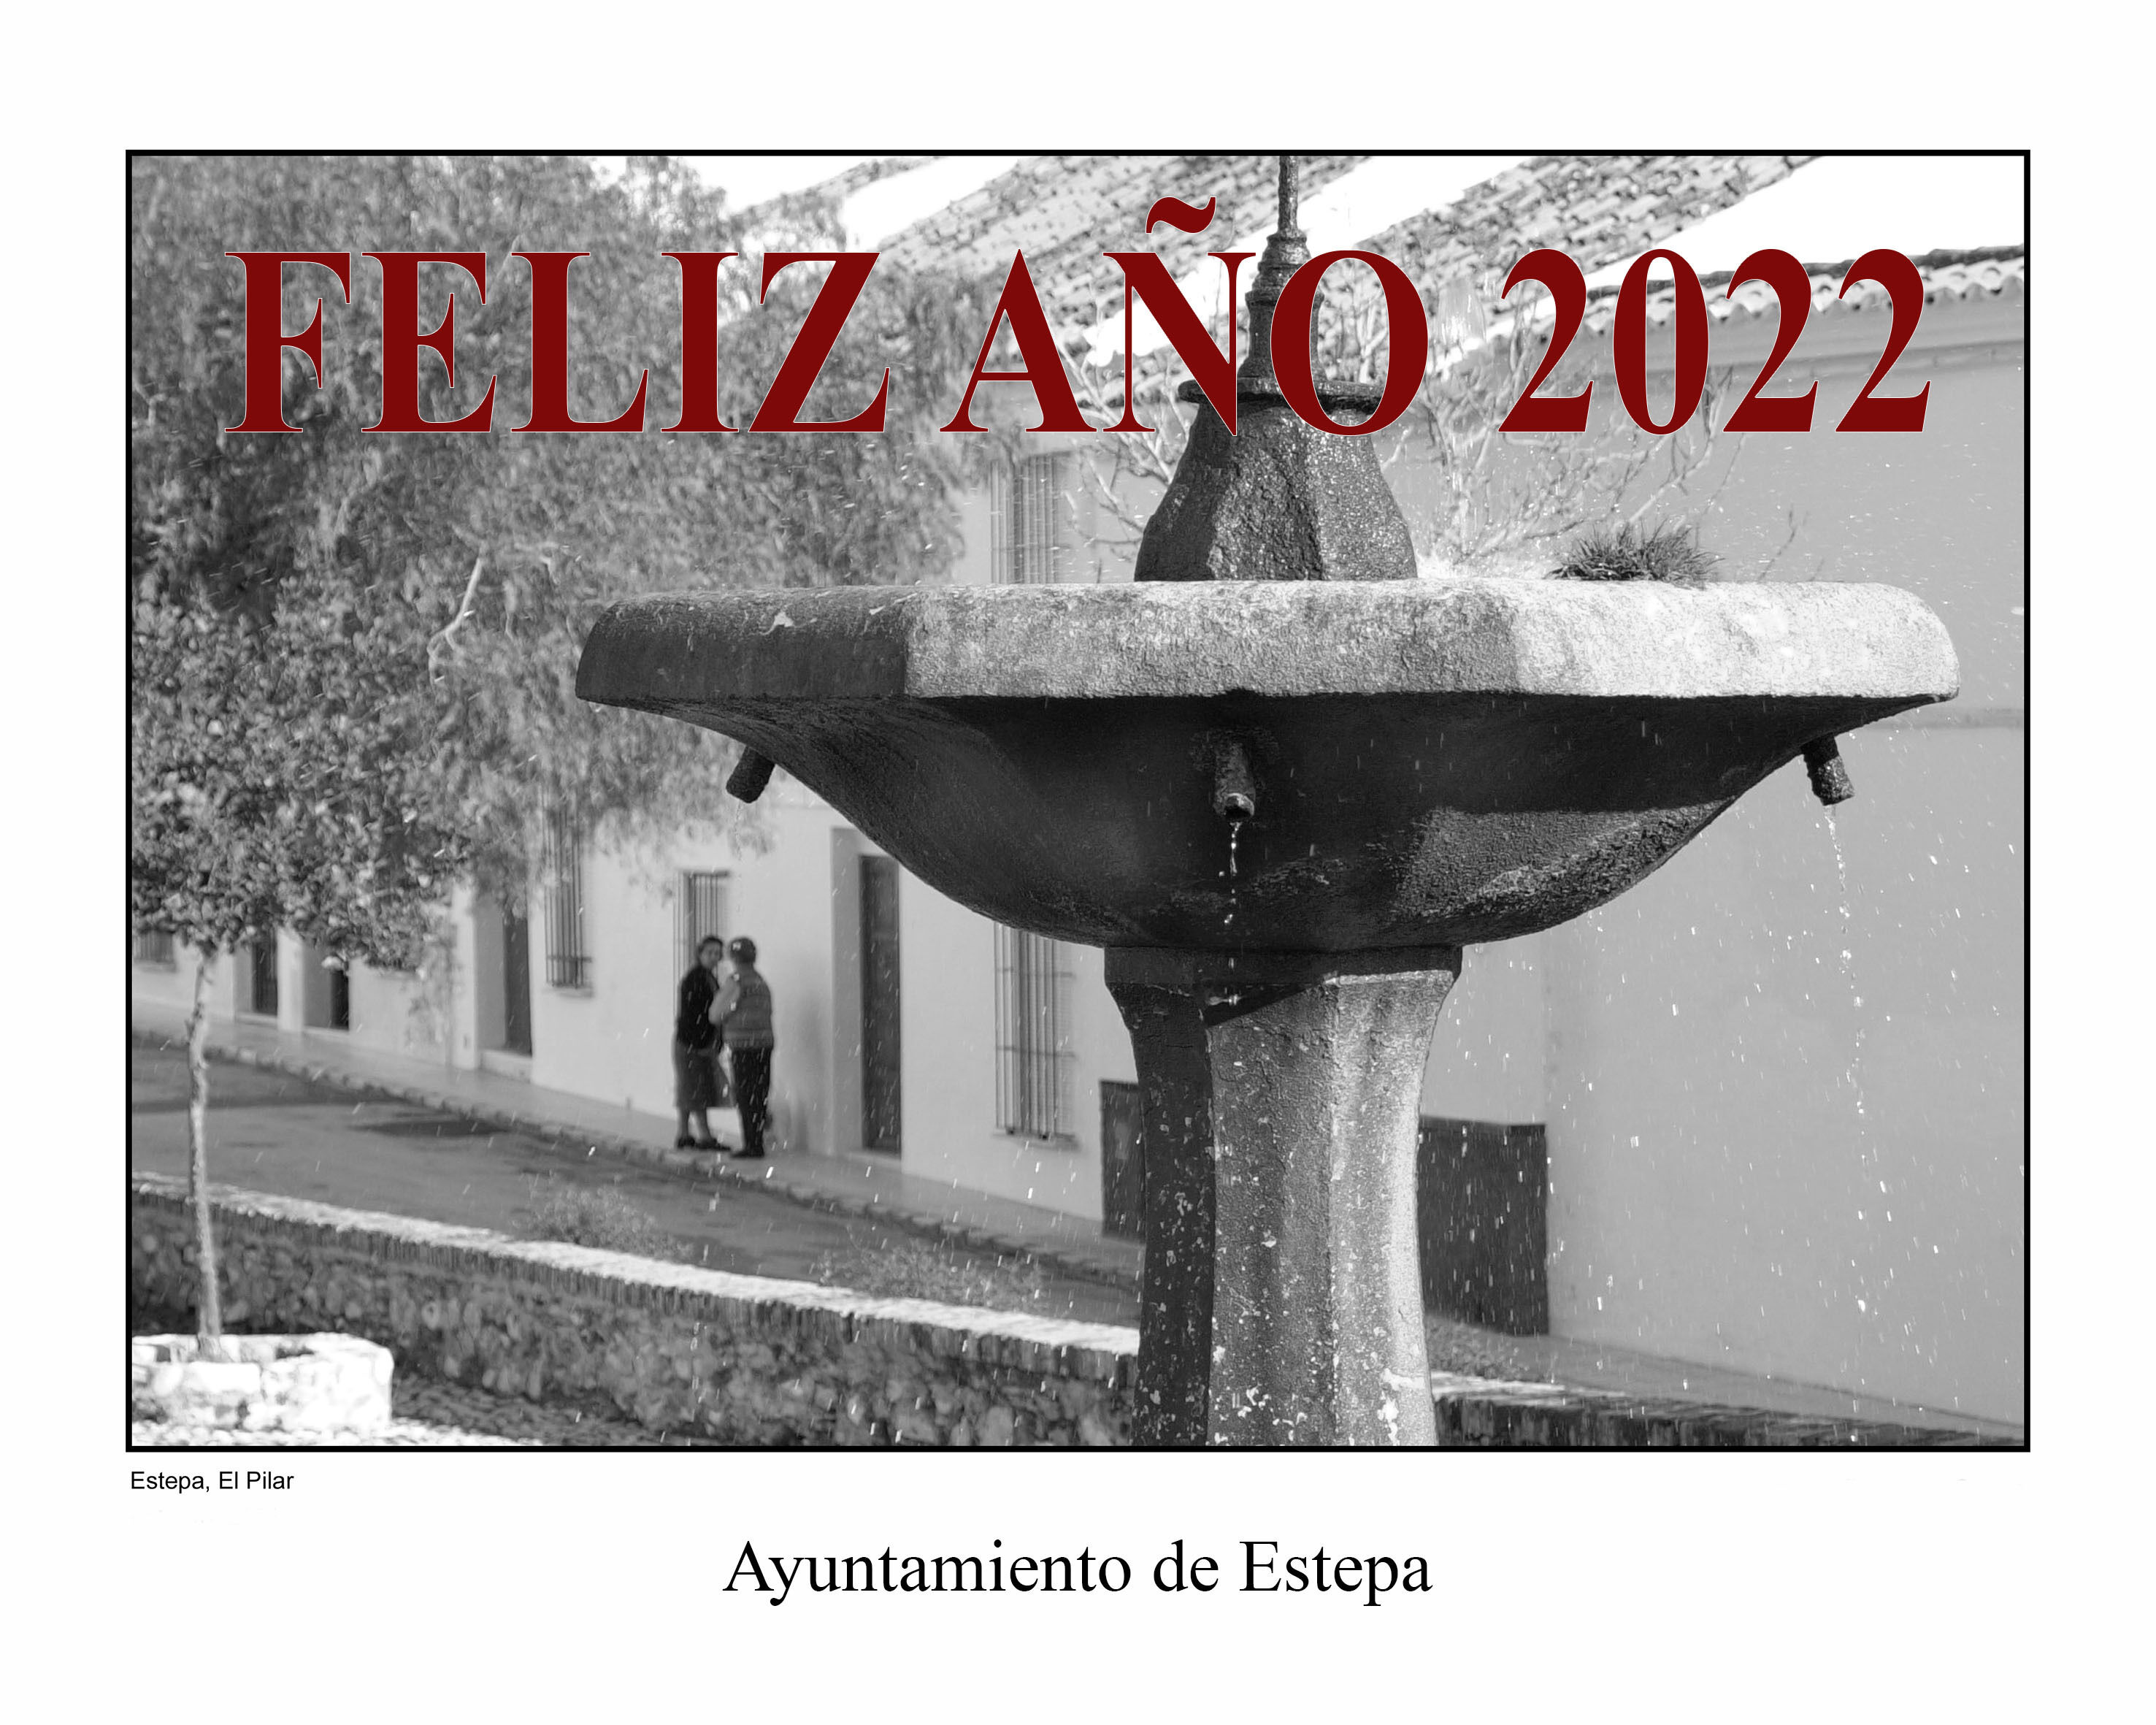 FELIZ AN¿O 2022